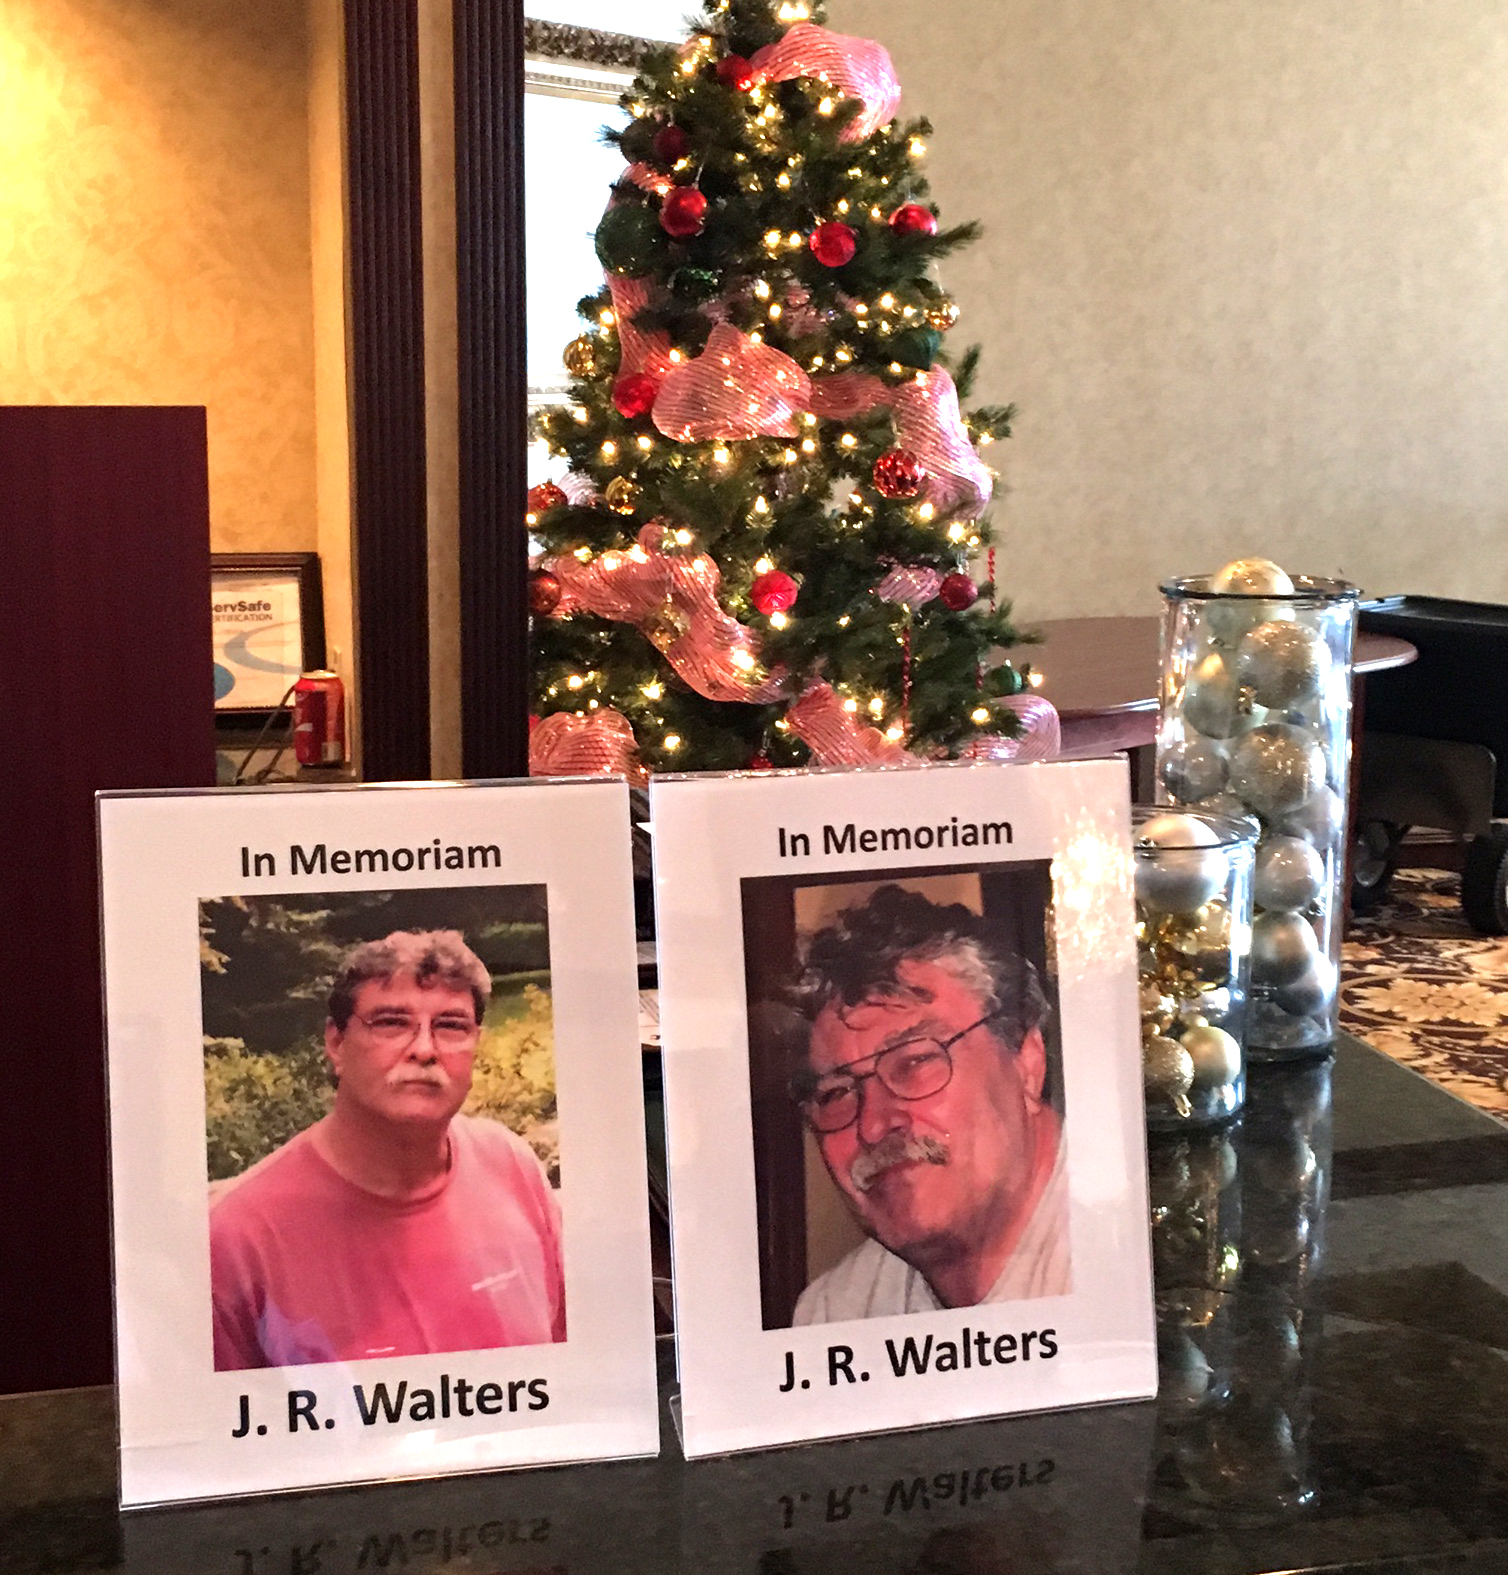 At December coin show In Memoriam honoring J. R. Walters